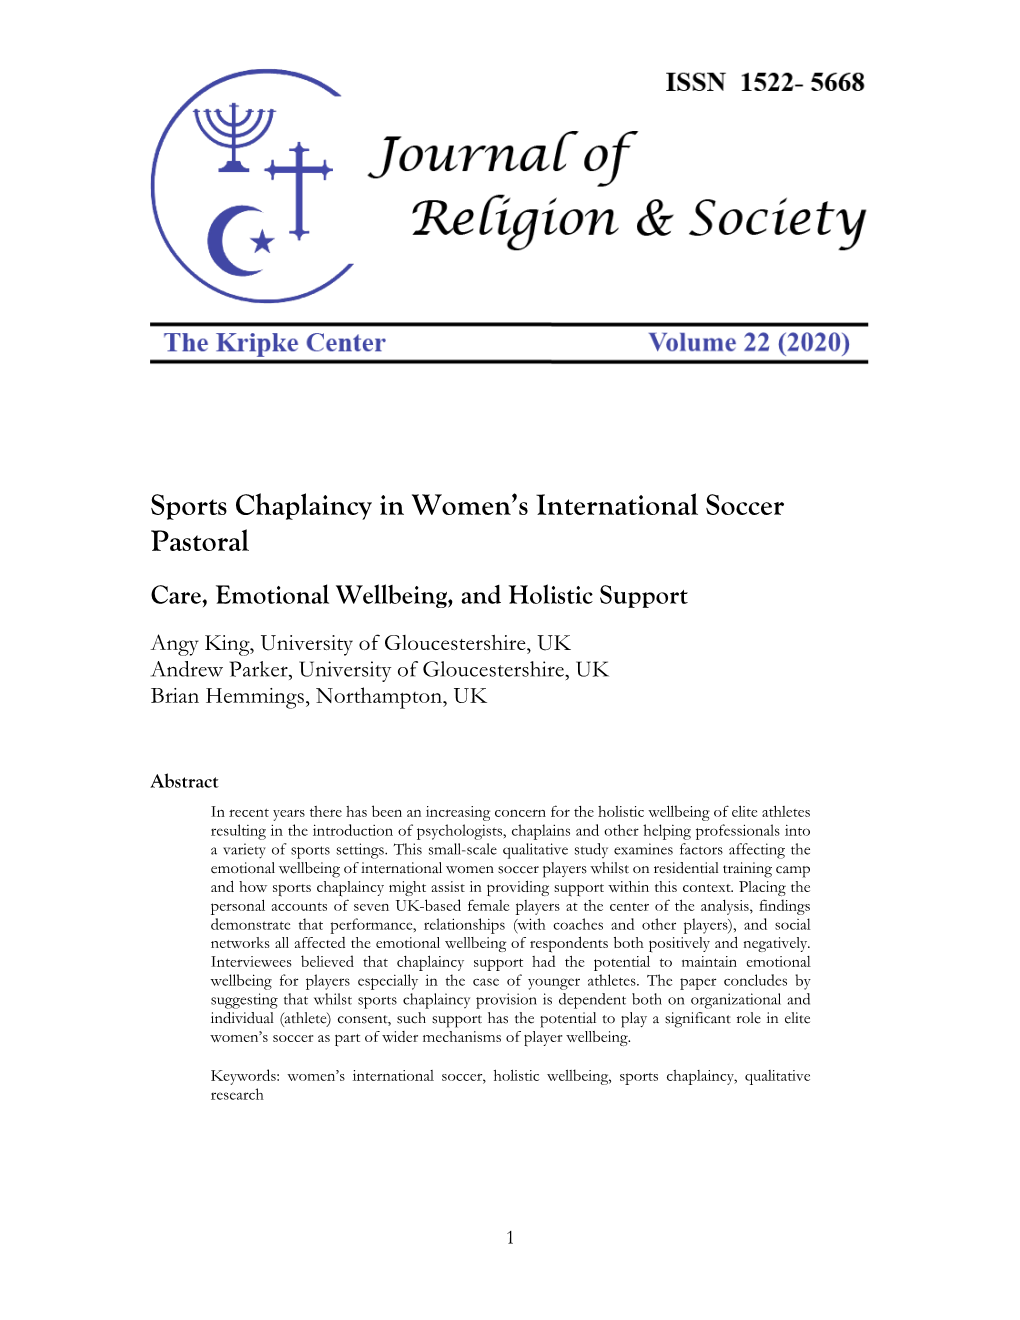 Sports Chaplaincy in Women's International Soccer Pastoral